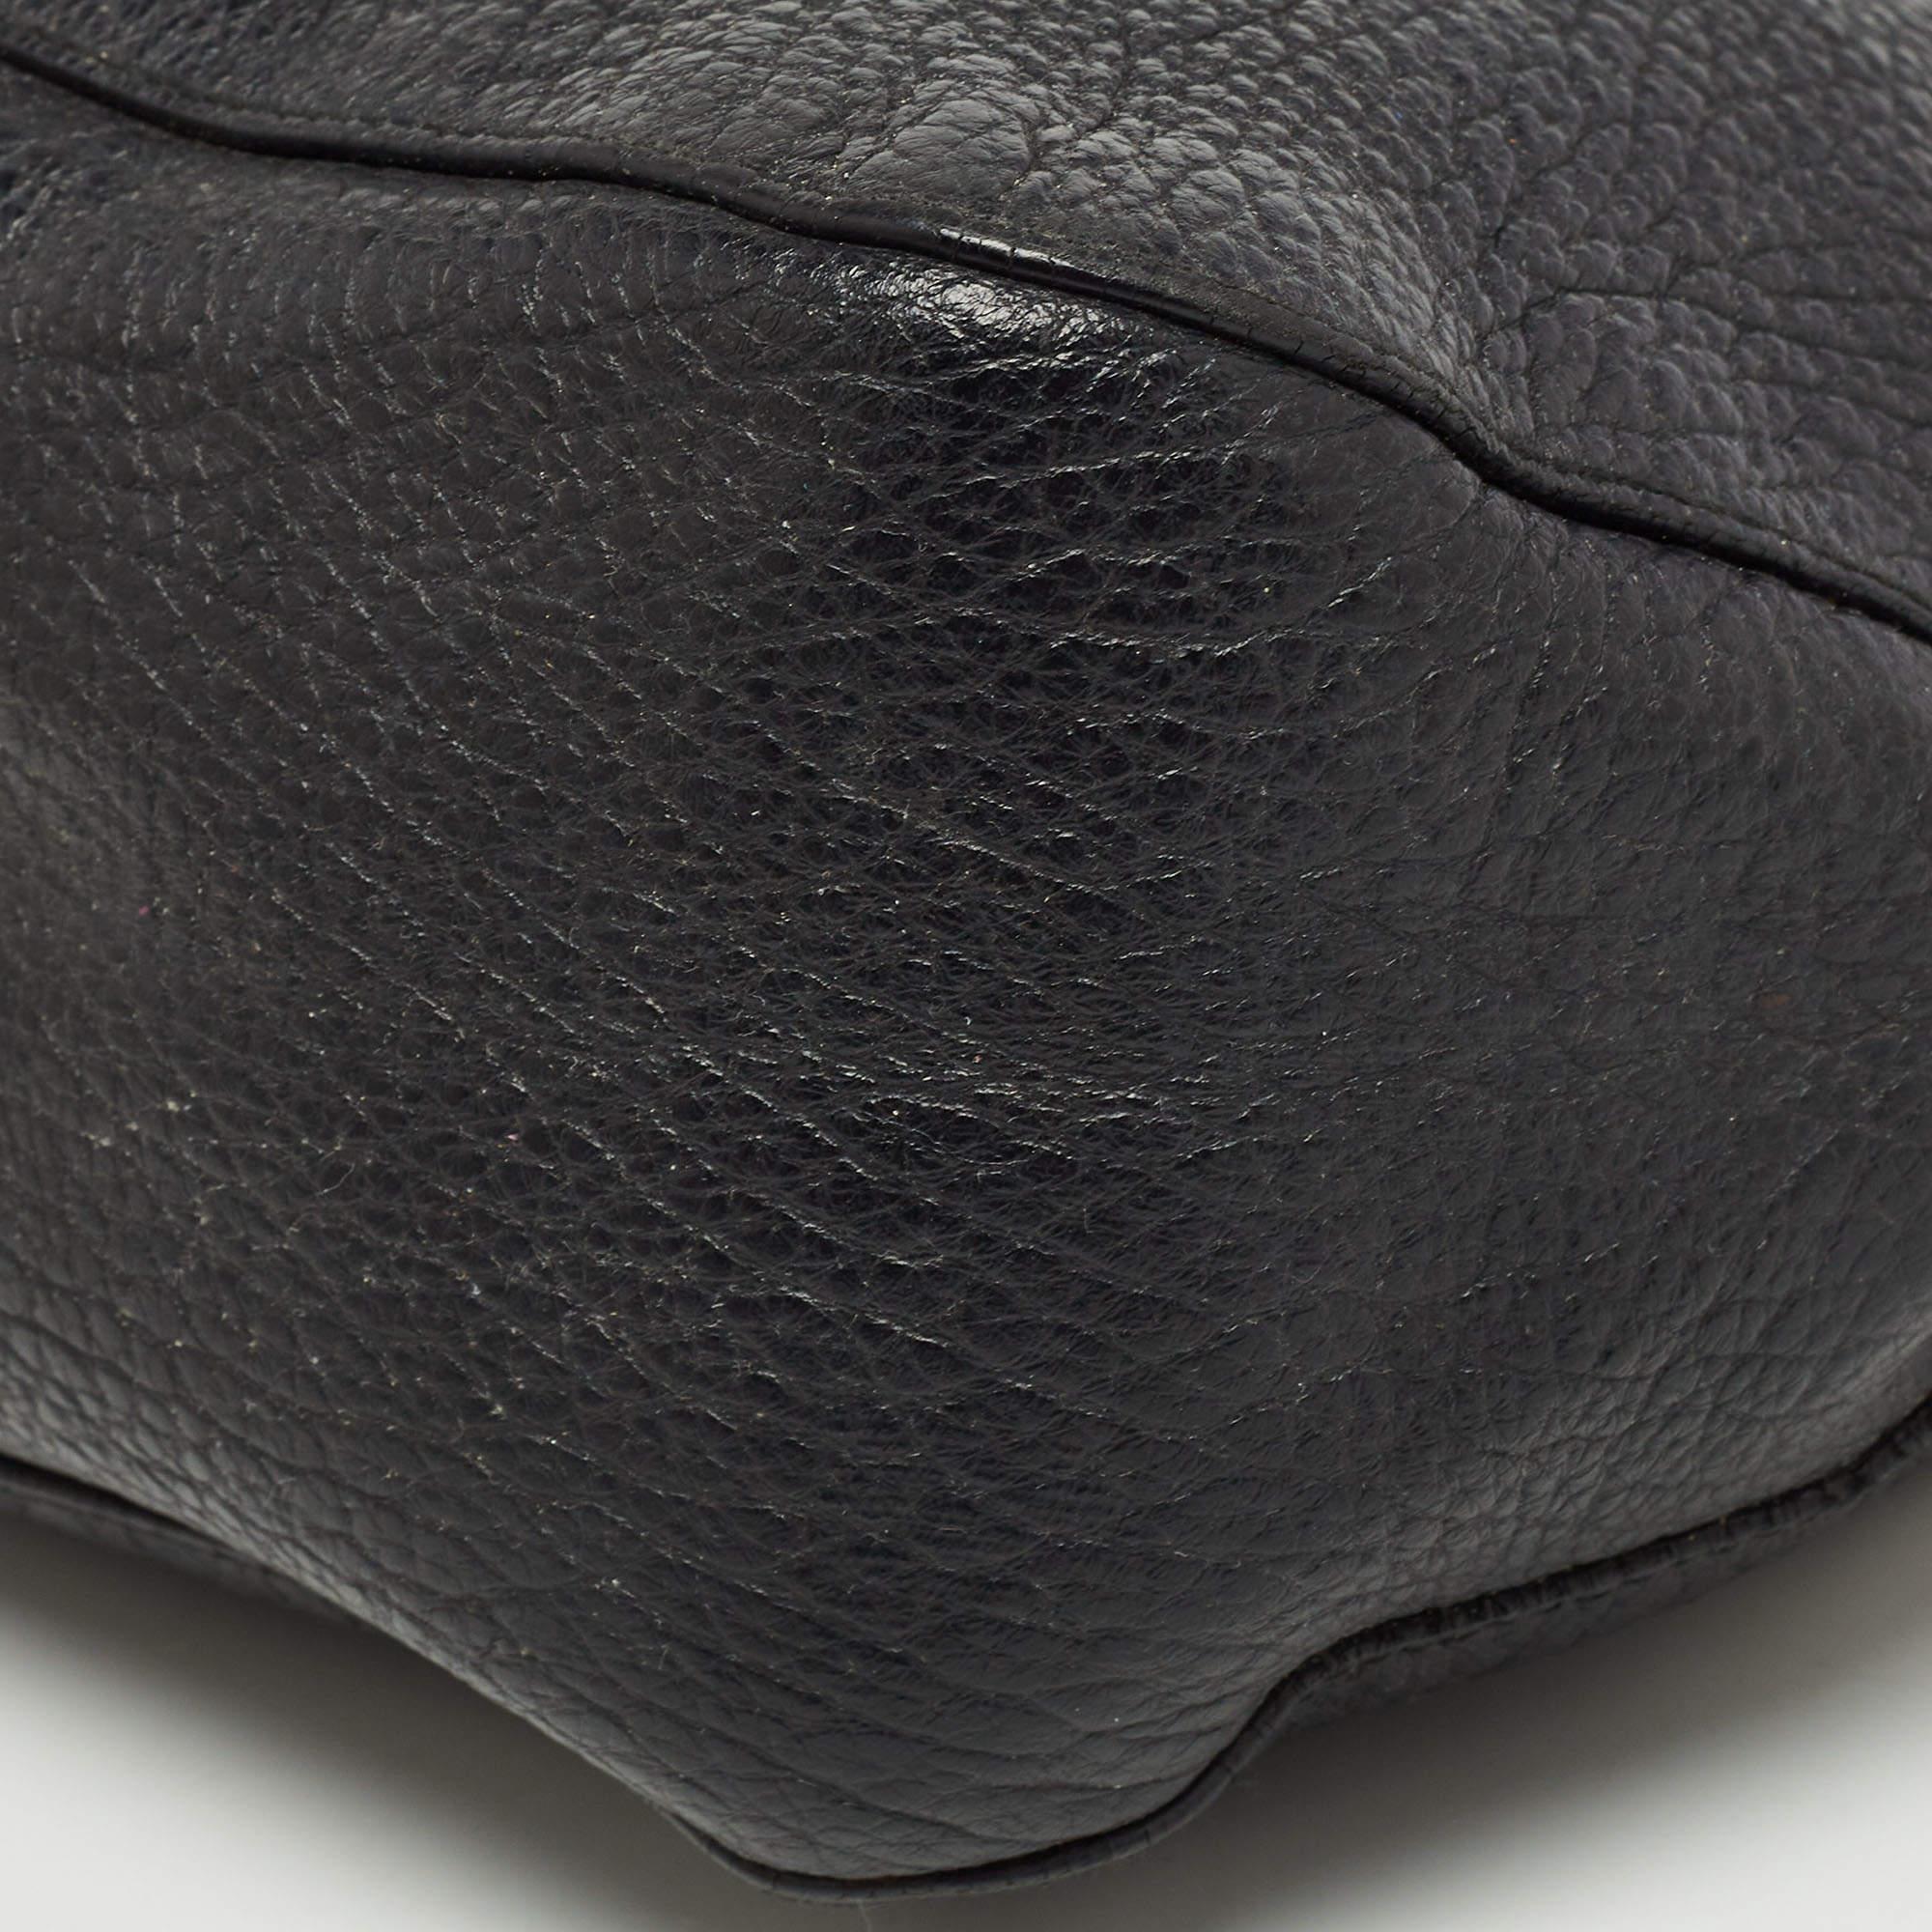 Burberry Black Pebbled Leather Ledbury Hobo In Fair Condition For Sale In Dubai, Al Qouz 2